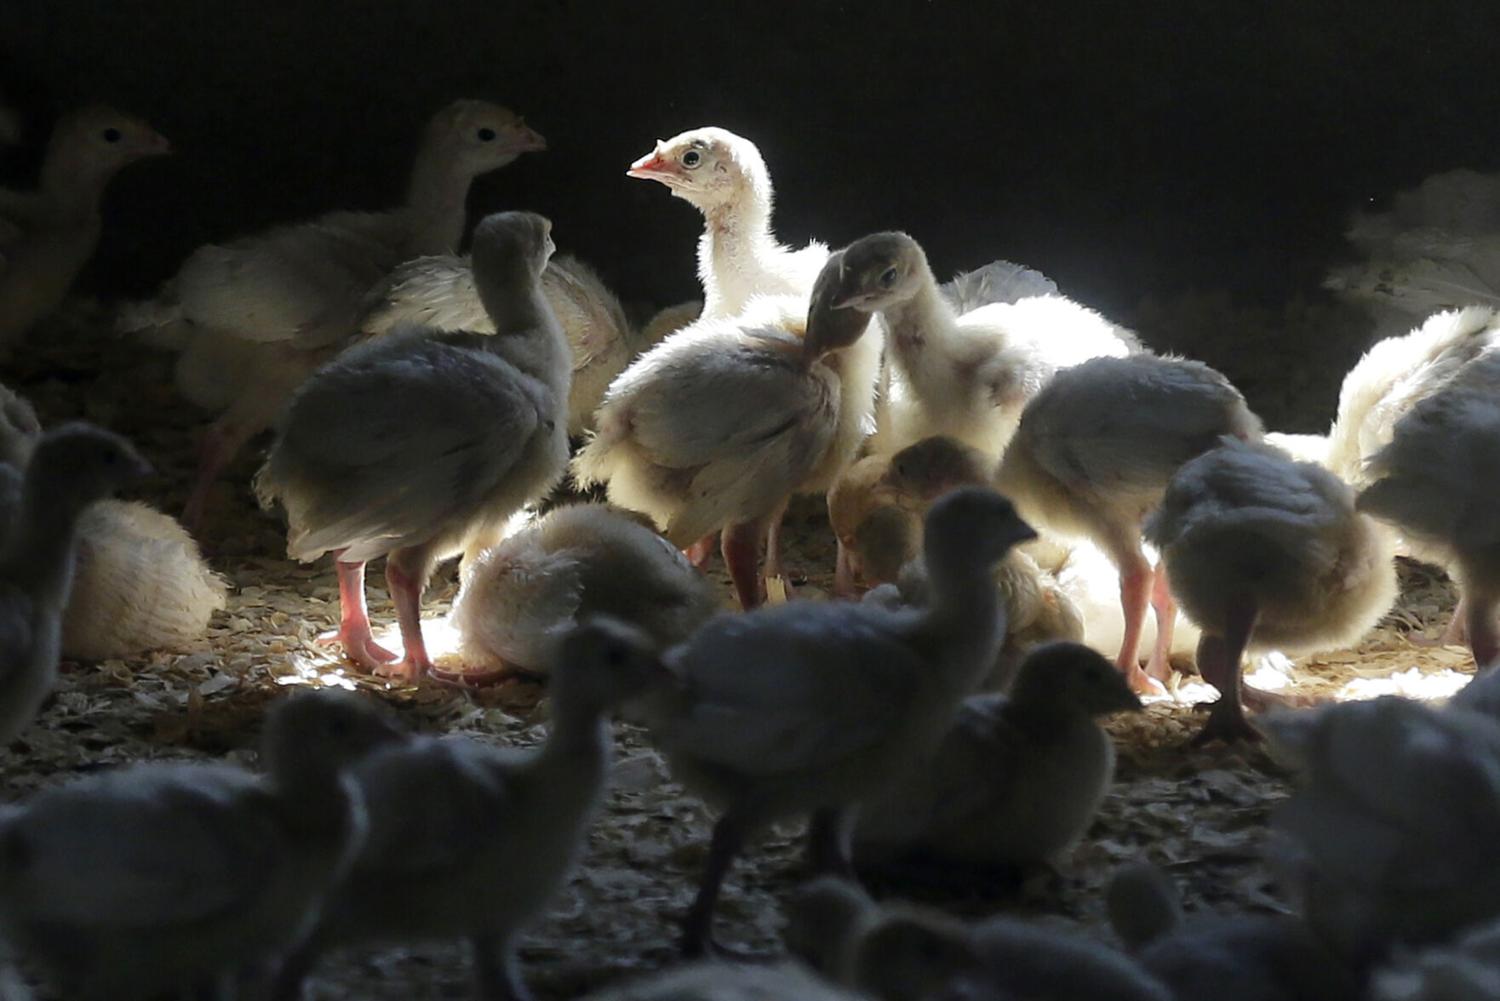 Bird flu detected in Sioux County flock [Video]